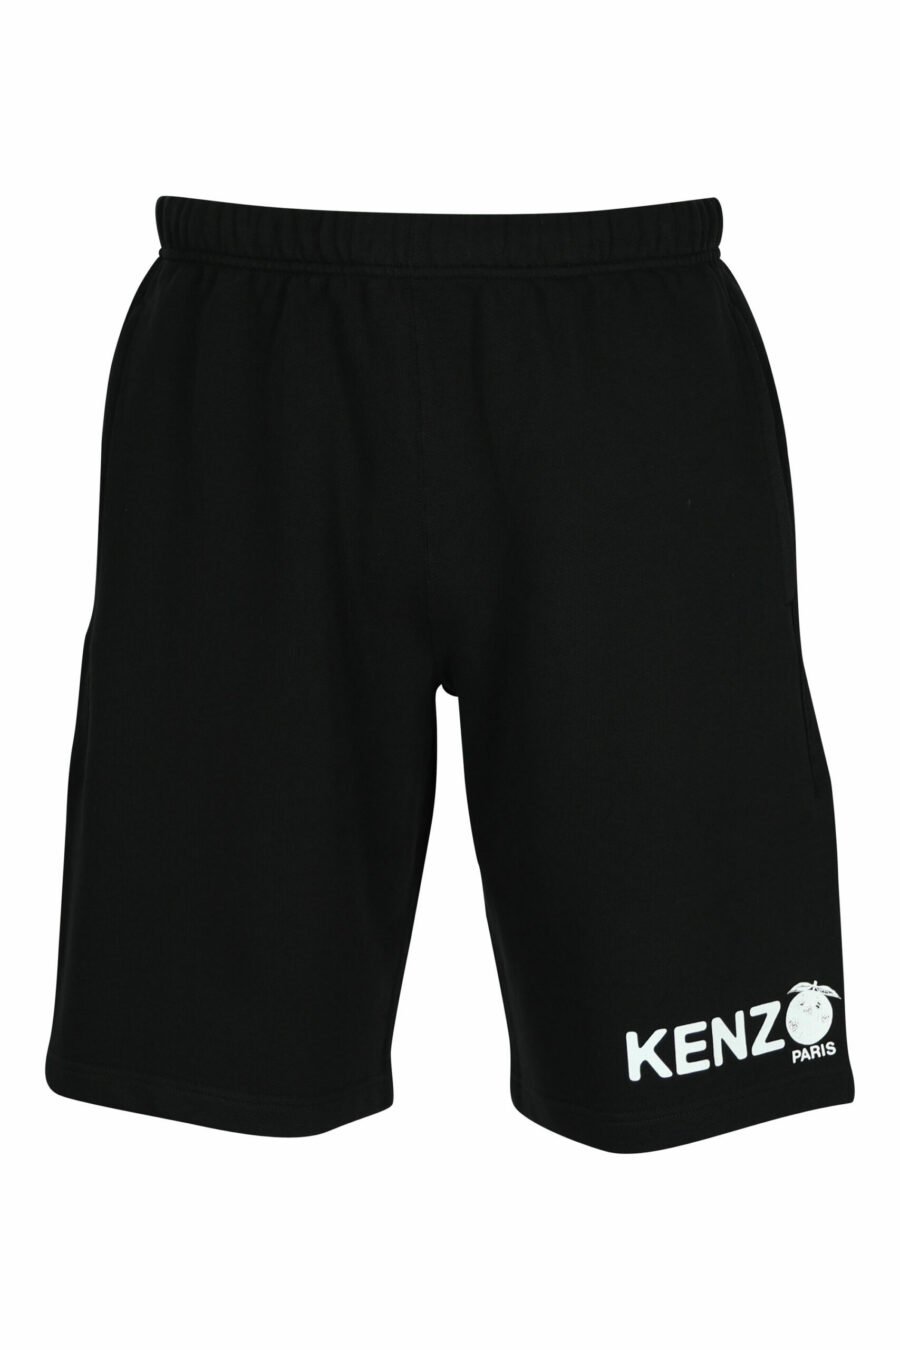 Trainingshose schwarz Shorts mit Minilogue "kenzo orange" - 3612230620872 skaliert